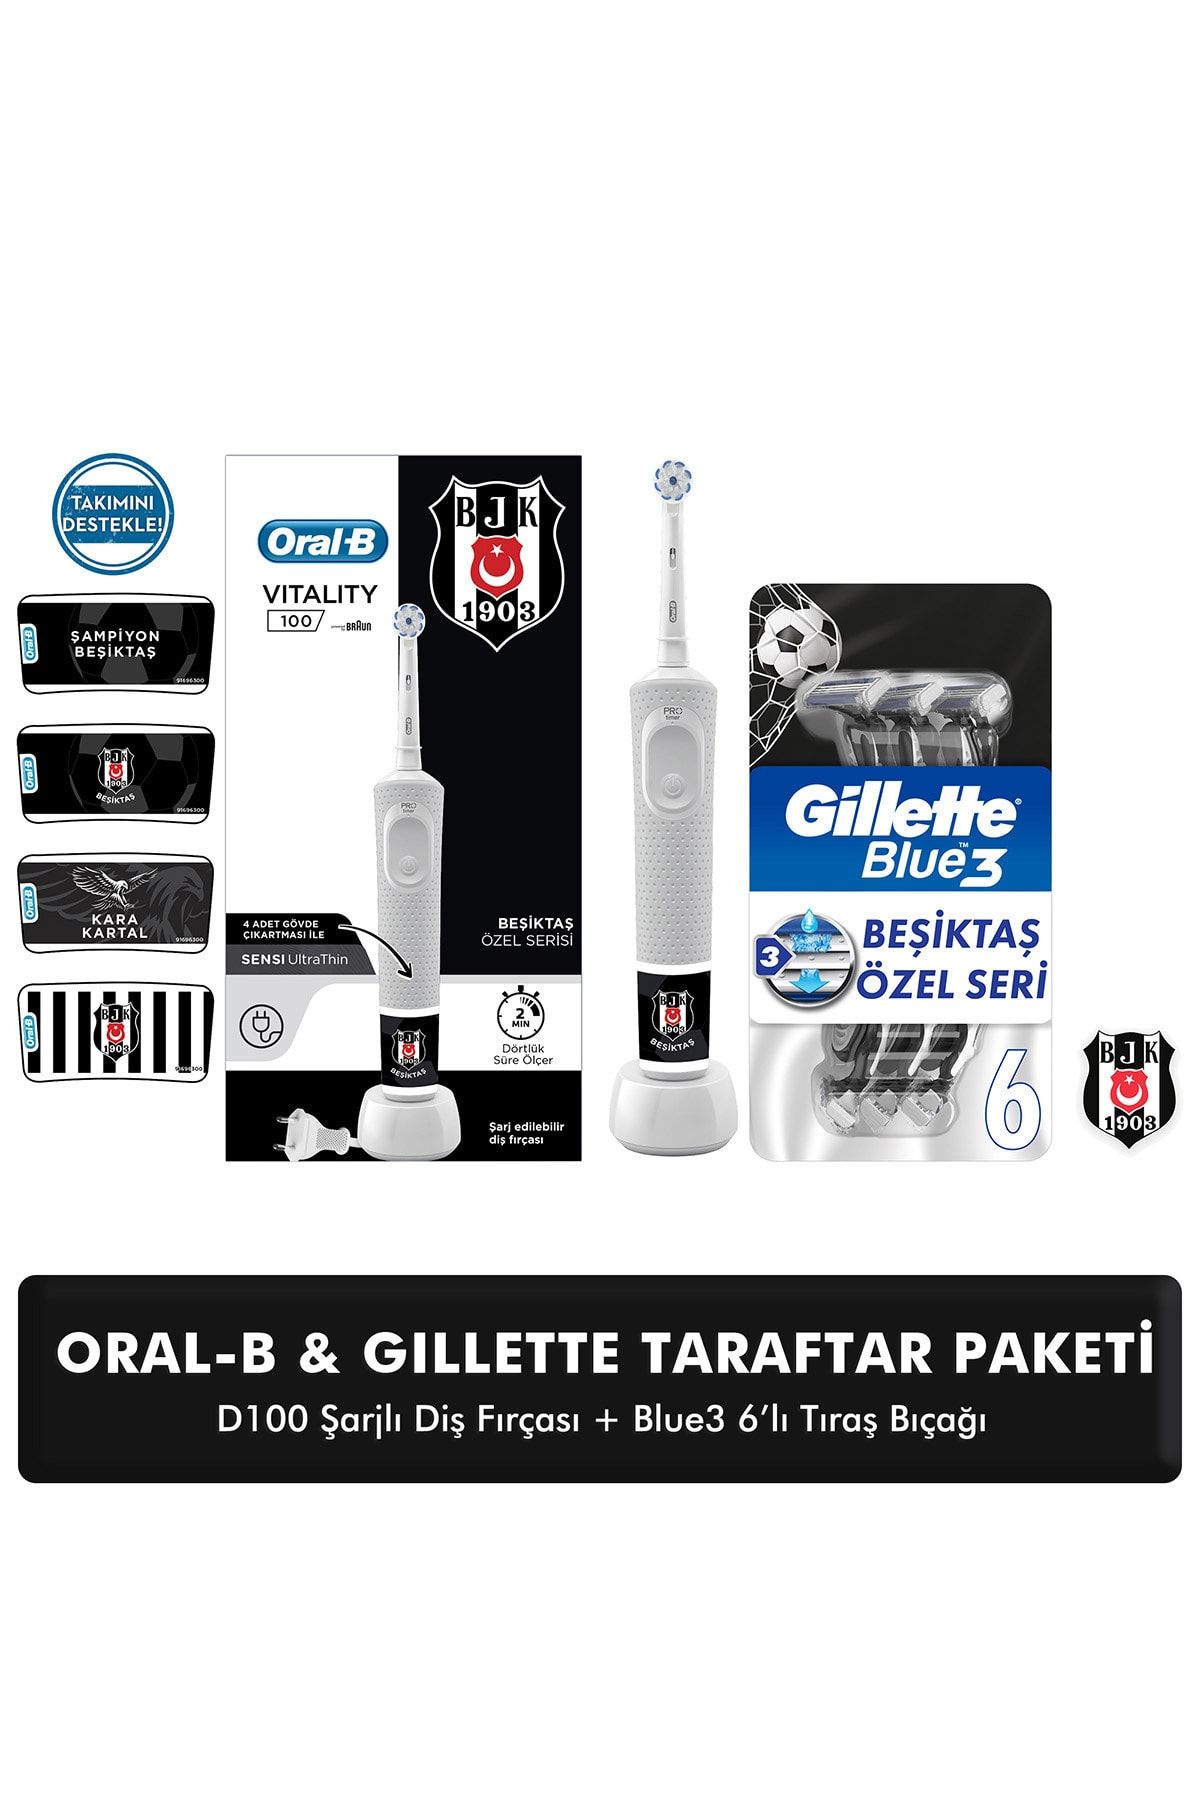 Oral-B D100 Şarjlı Fırça + Gillette Blue3 Beşiktaş Taraftar Paketi